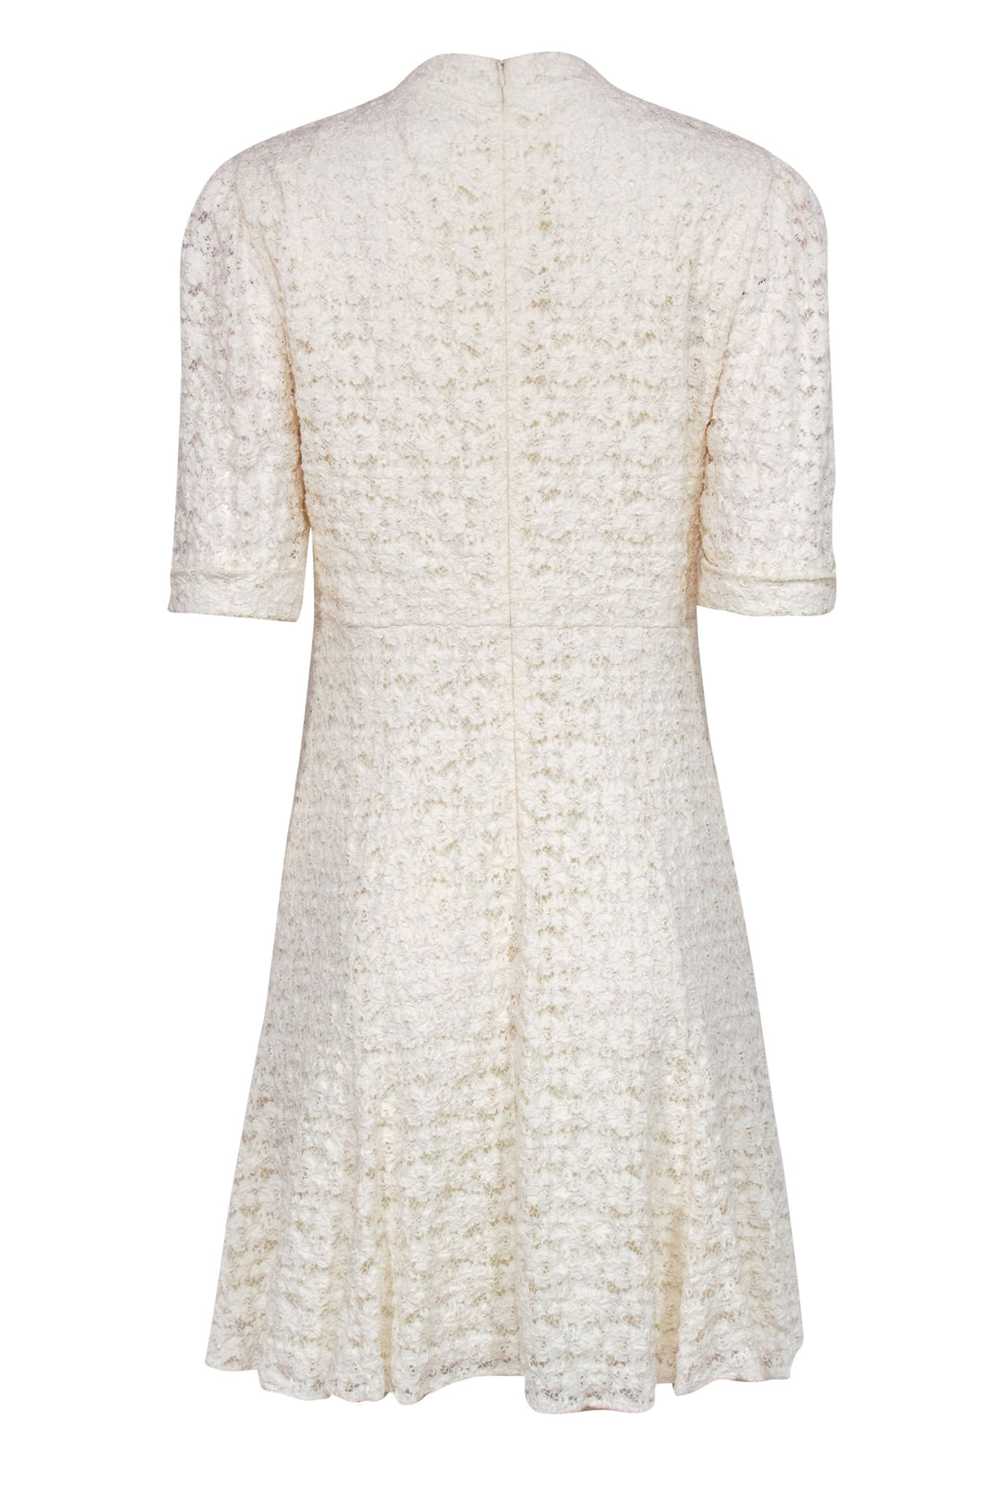 Shoshanna - Cream Lace Cropped Sleeve Dress w/ Ru… - image 3